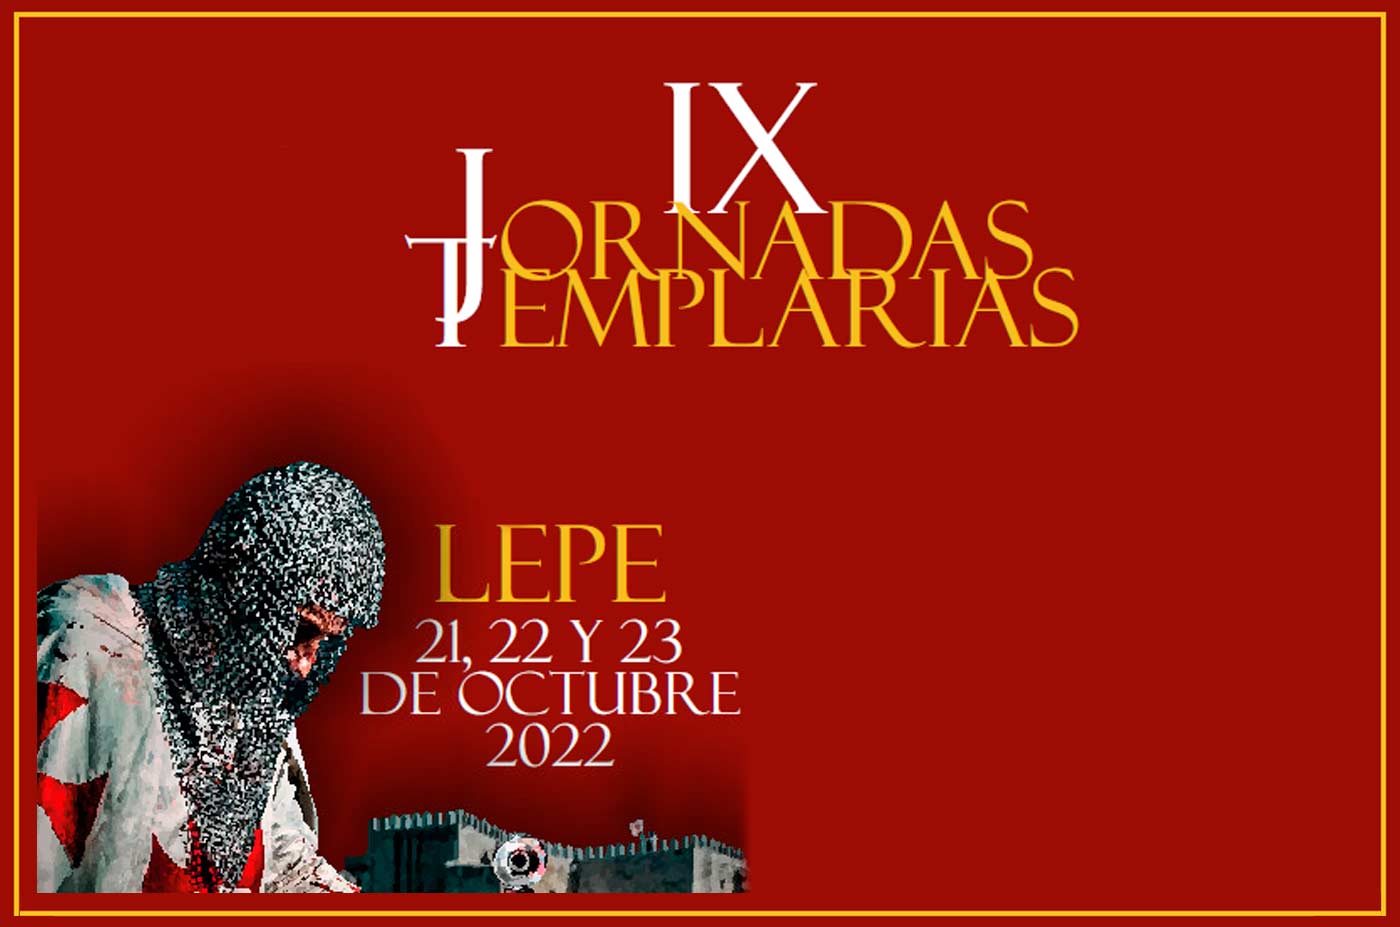 Jornadas Templarias Lepe 2022